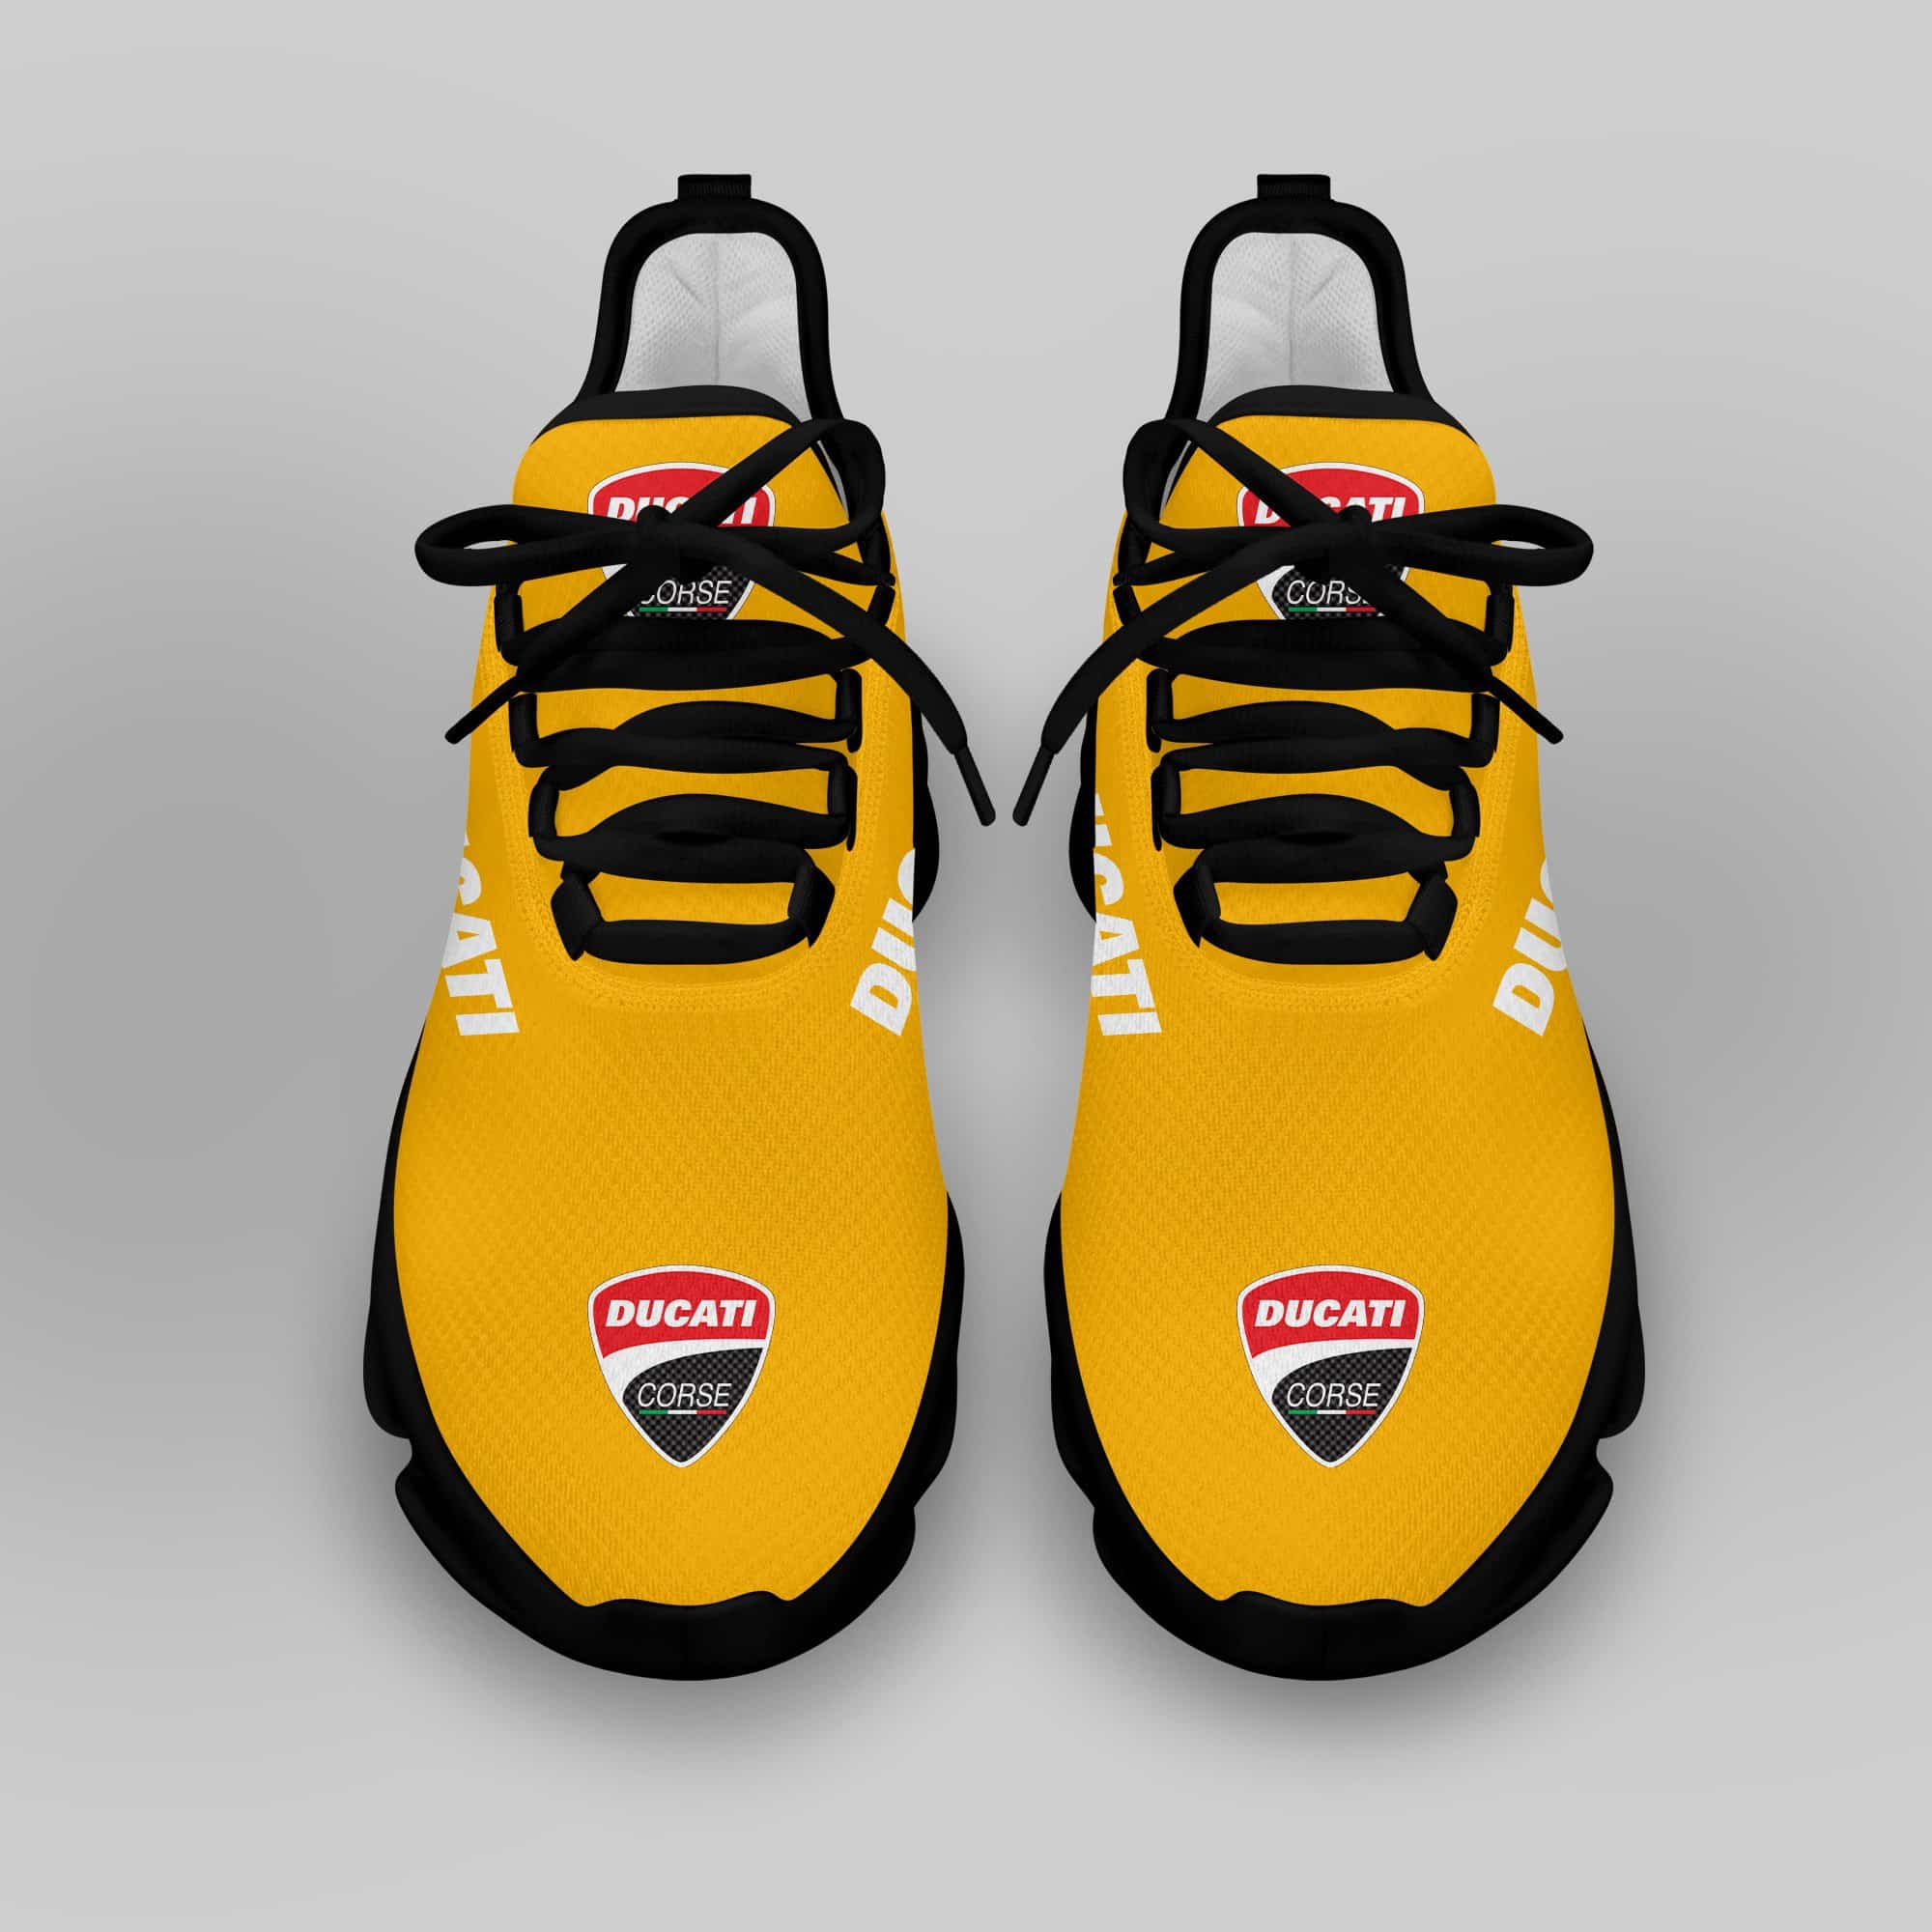 Ducati Racing Running Shoes Max Soul Shoes Sneakers Ver 31 4